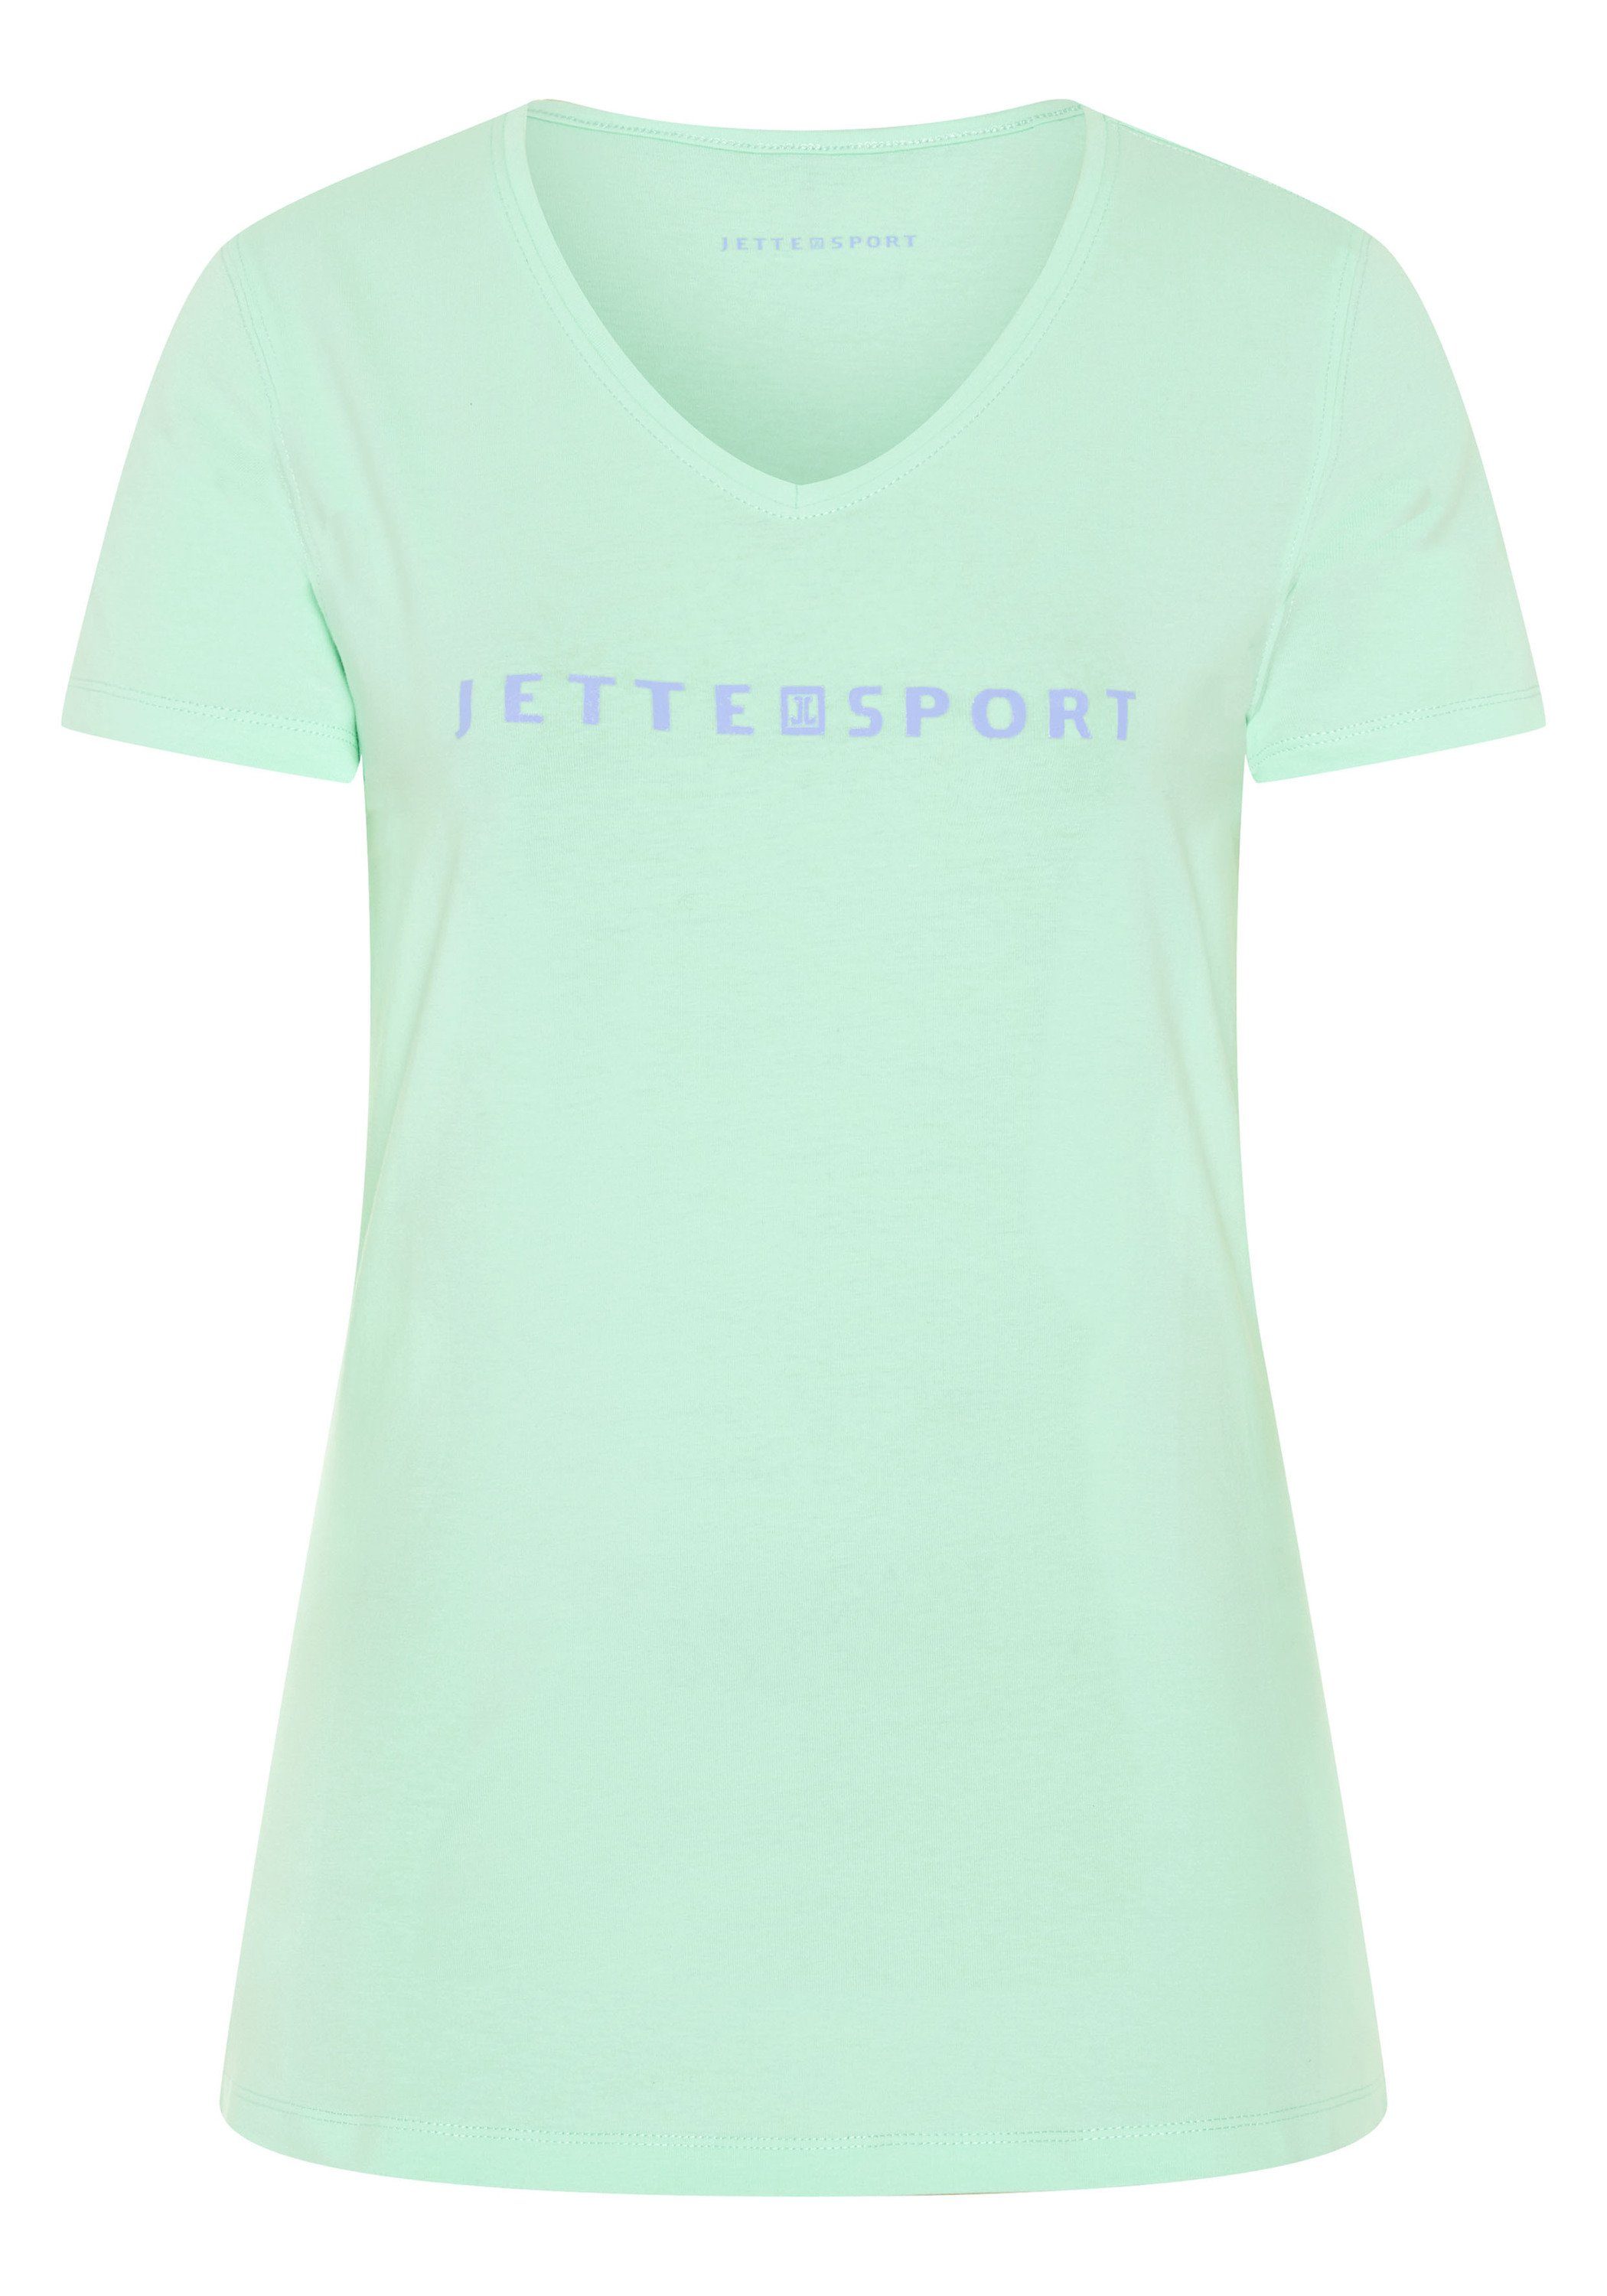 JETTE SPORT Print-Shirt mit Logo-Pigment-Print 13-5412 Beach Glass